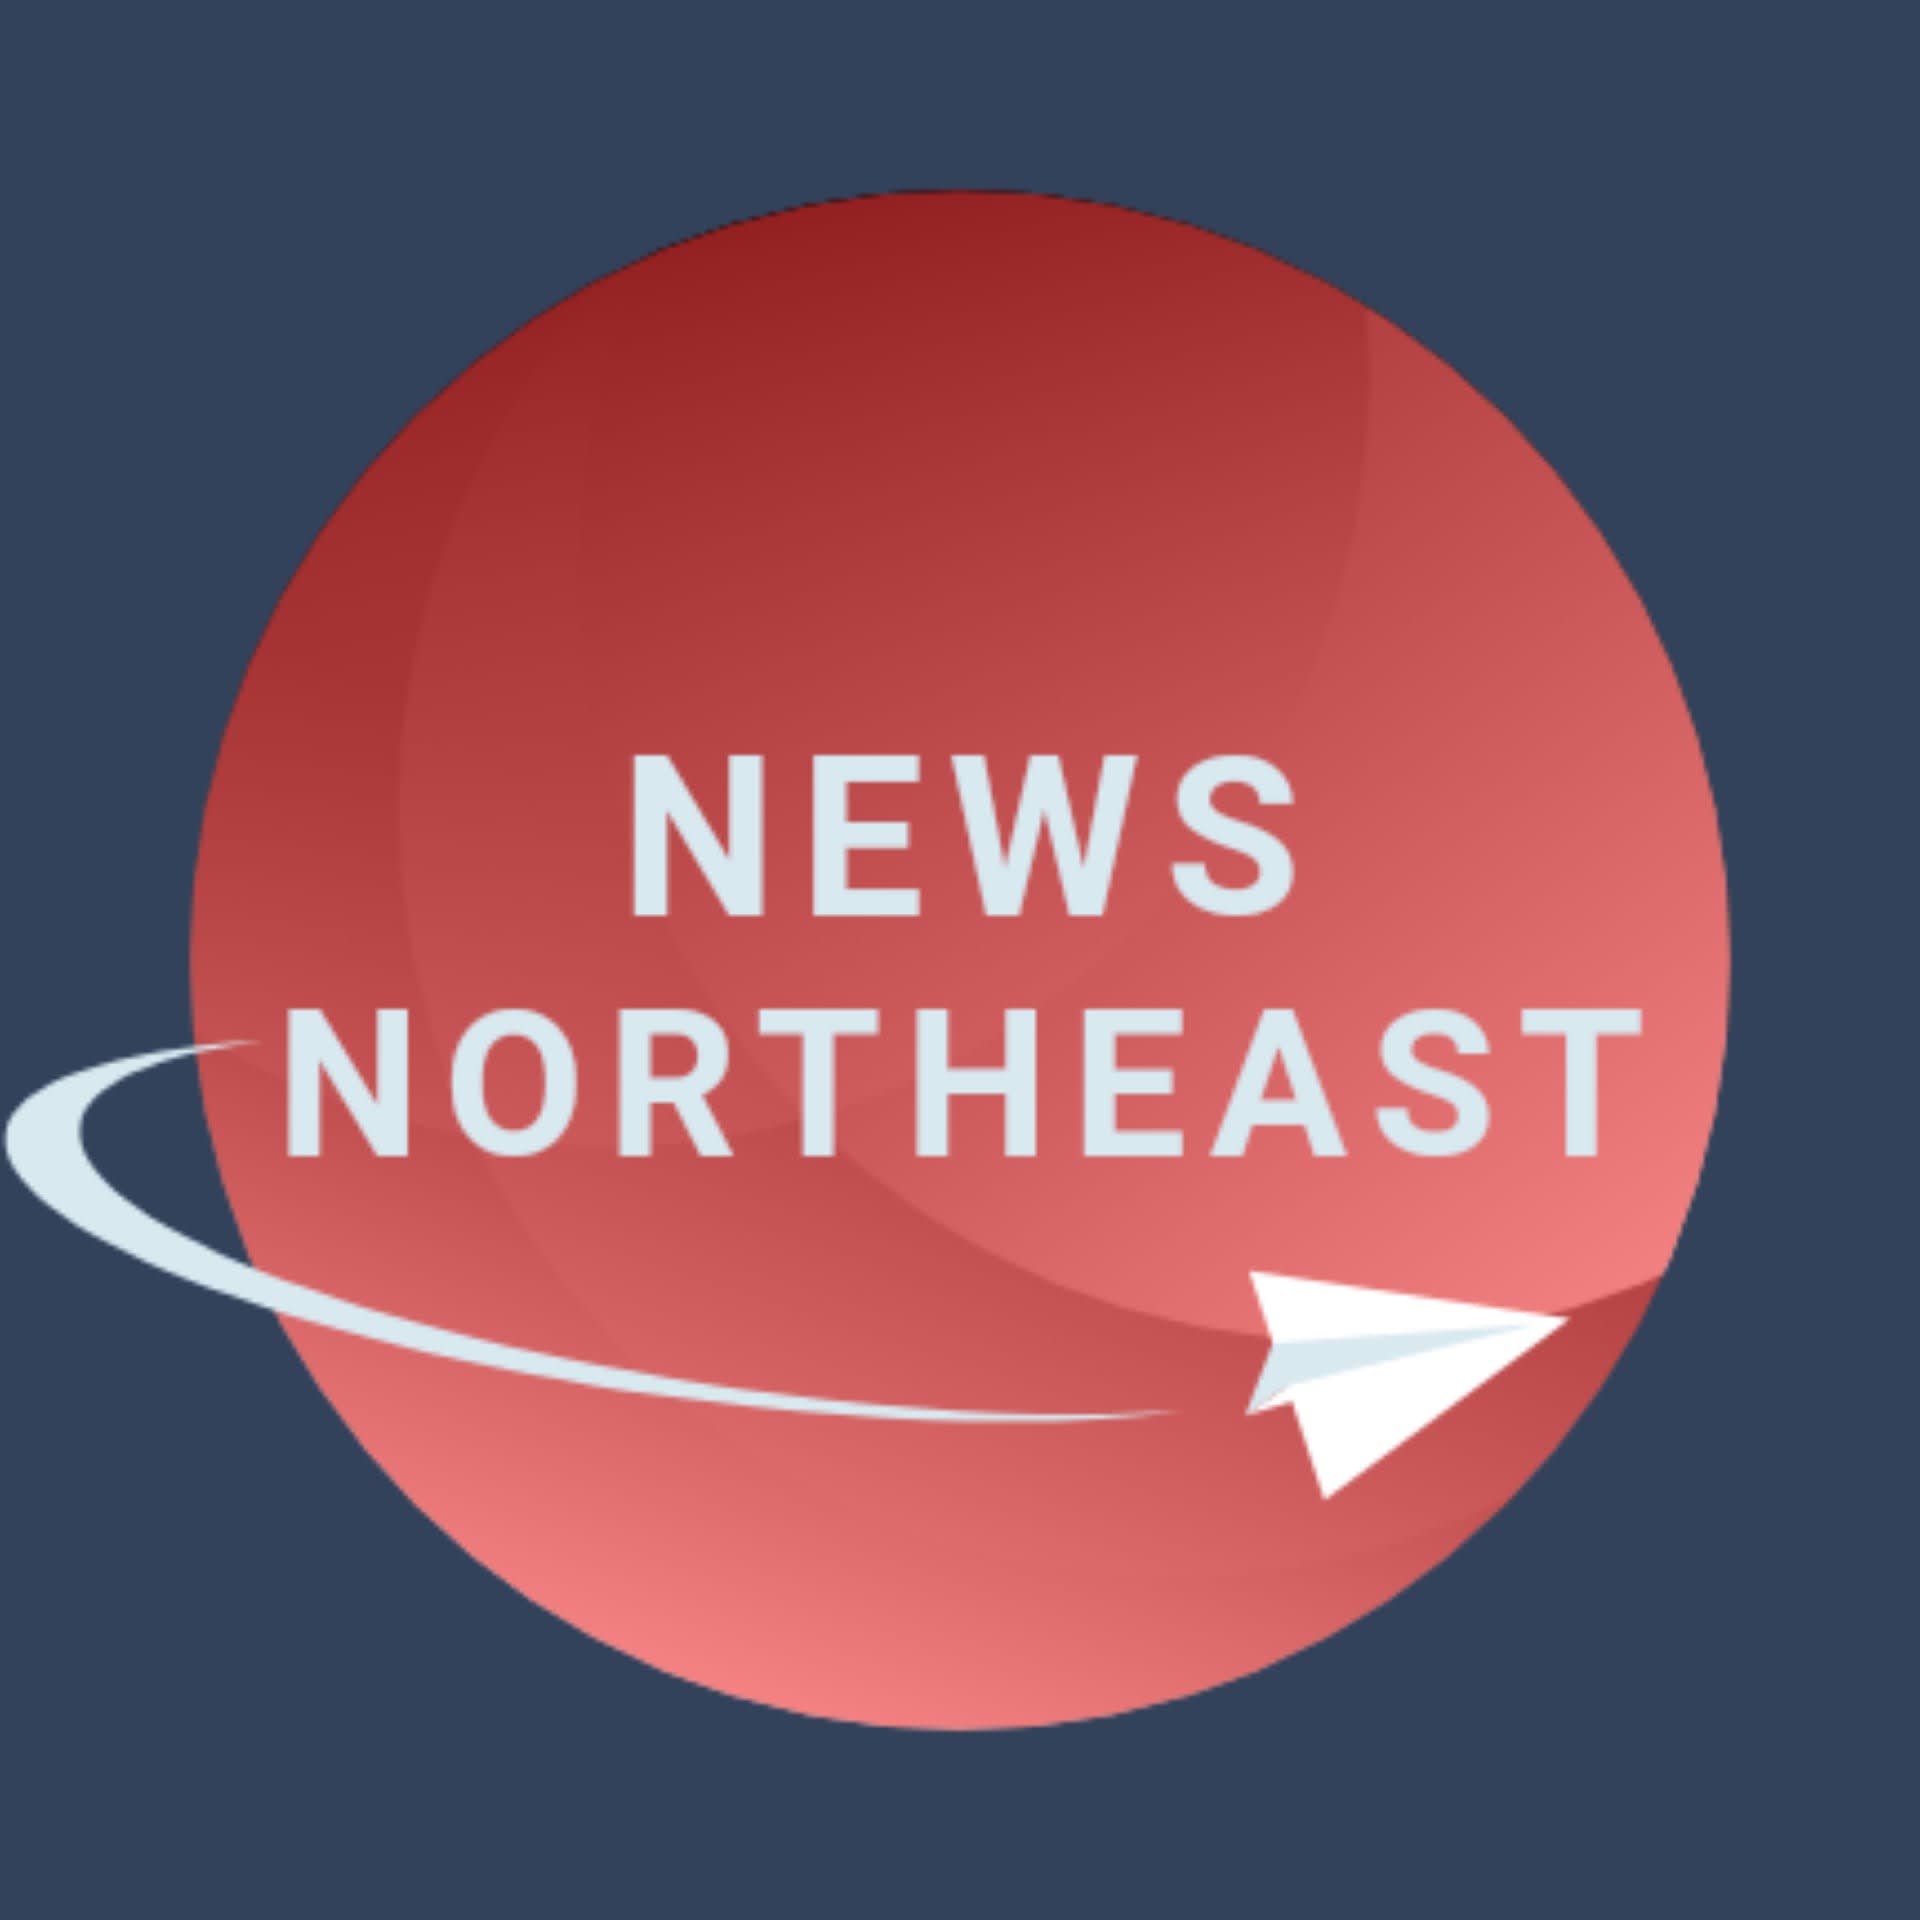 News Northeast